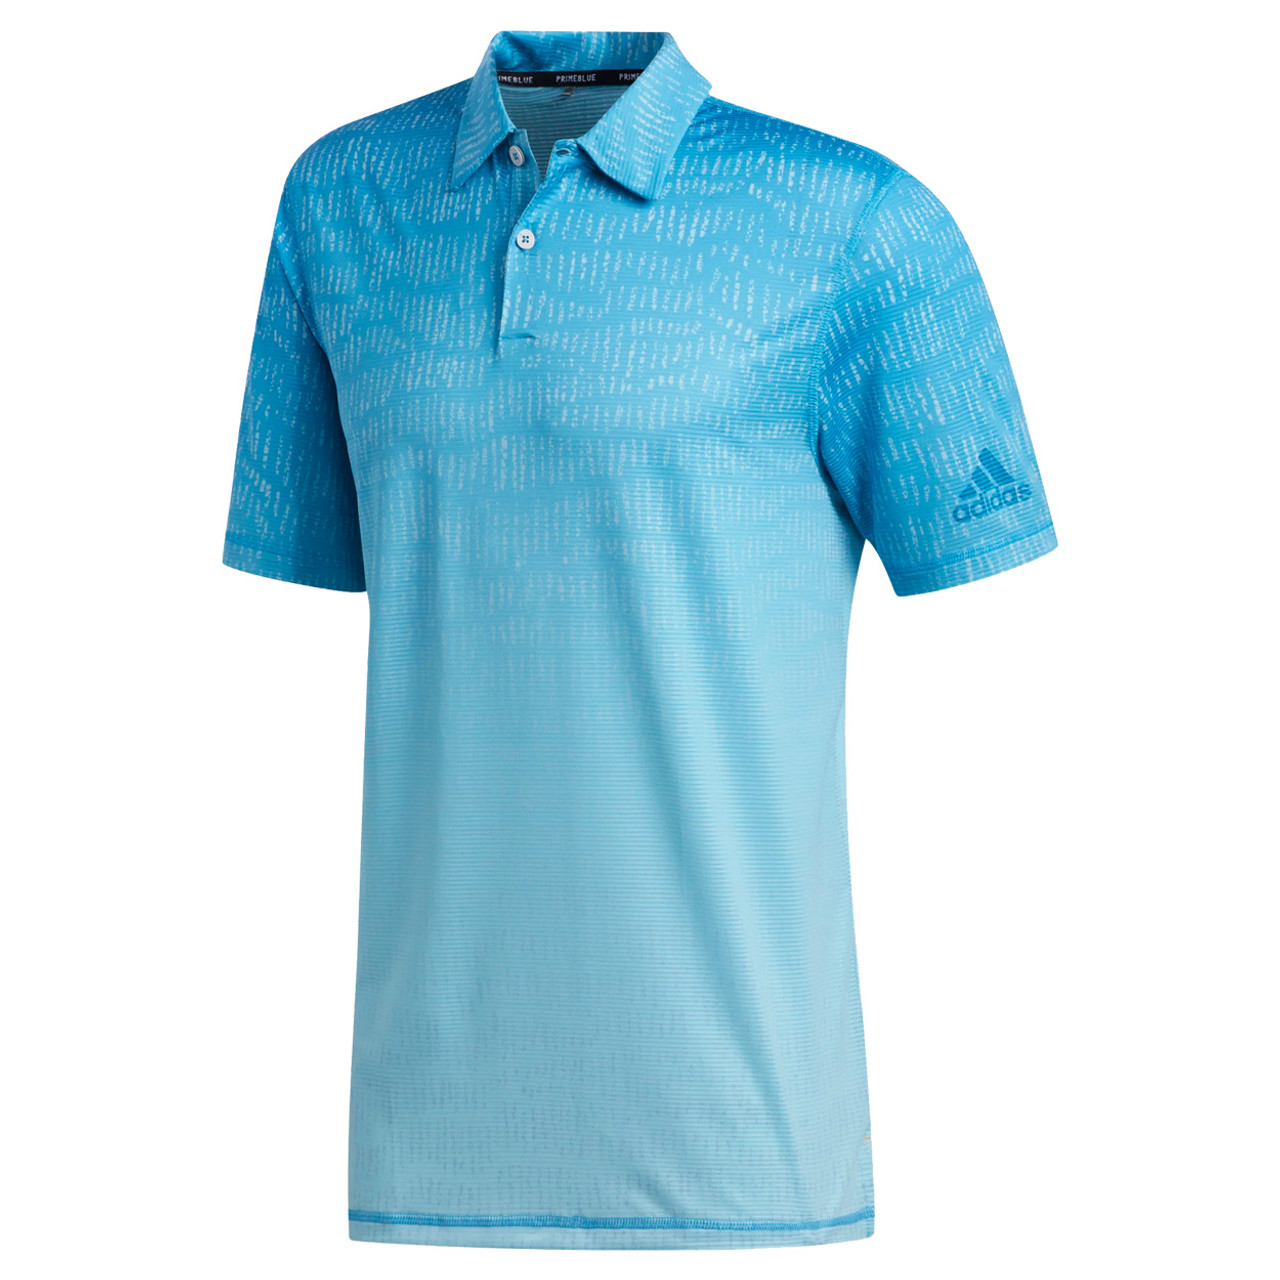 Adidas Golf Men's Primeblue Block Polo Shirt - GolfEtail.com